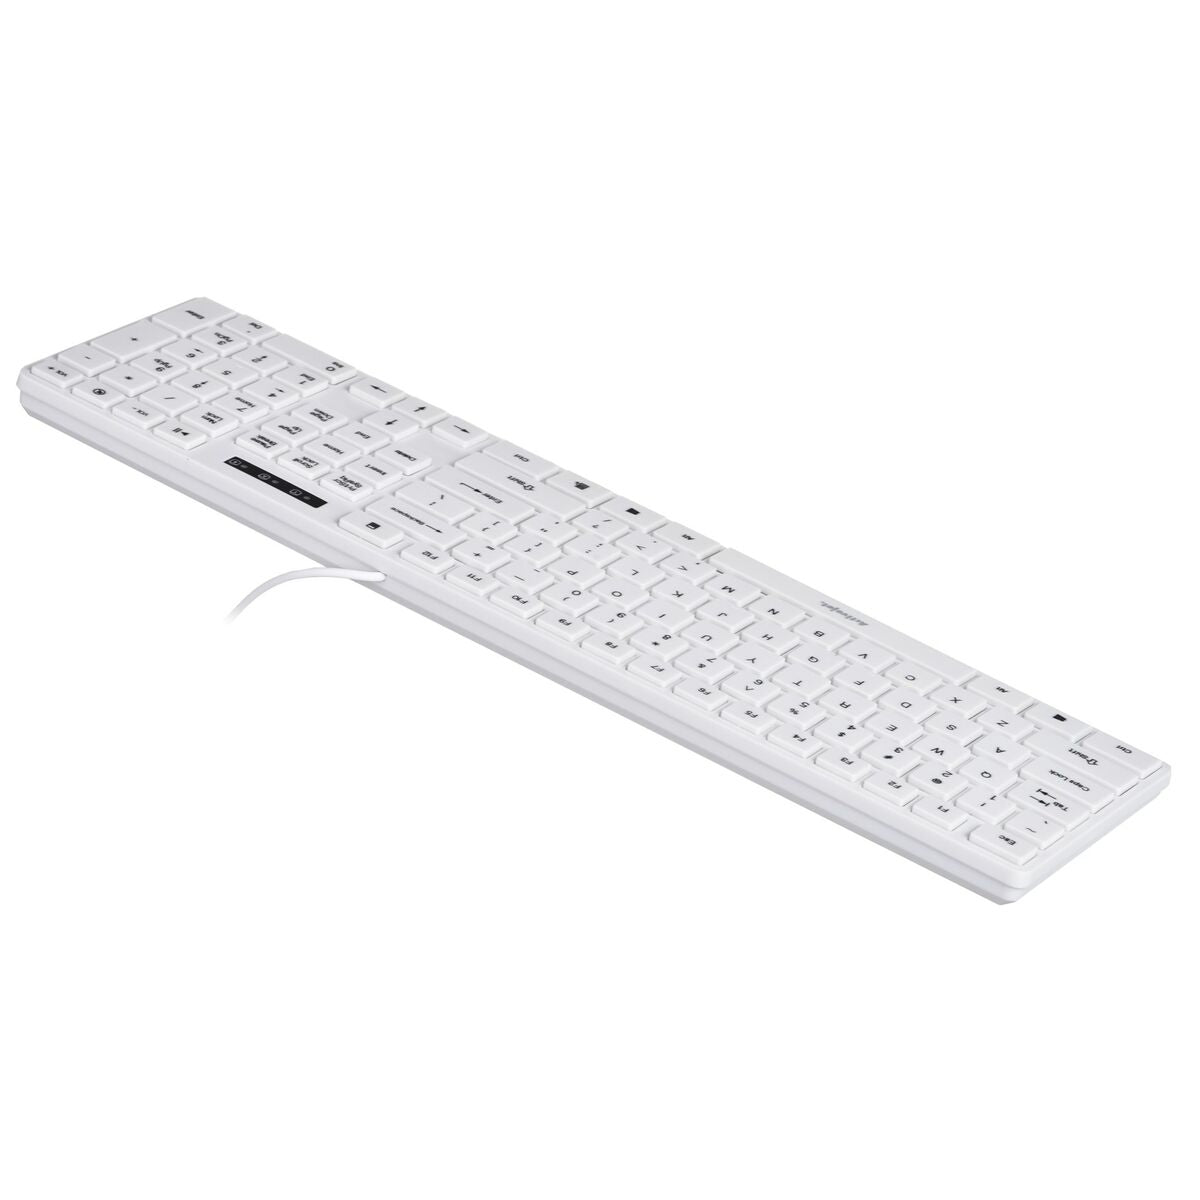 Tastatur Activejet Klawiatura USB K-3066SW Weiß QWERTY - CA International  